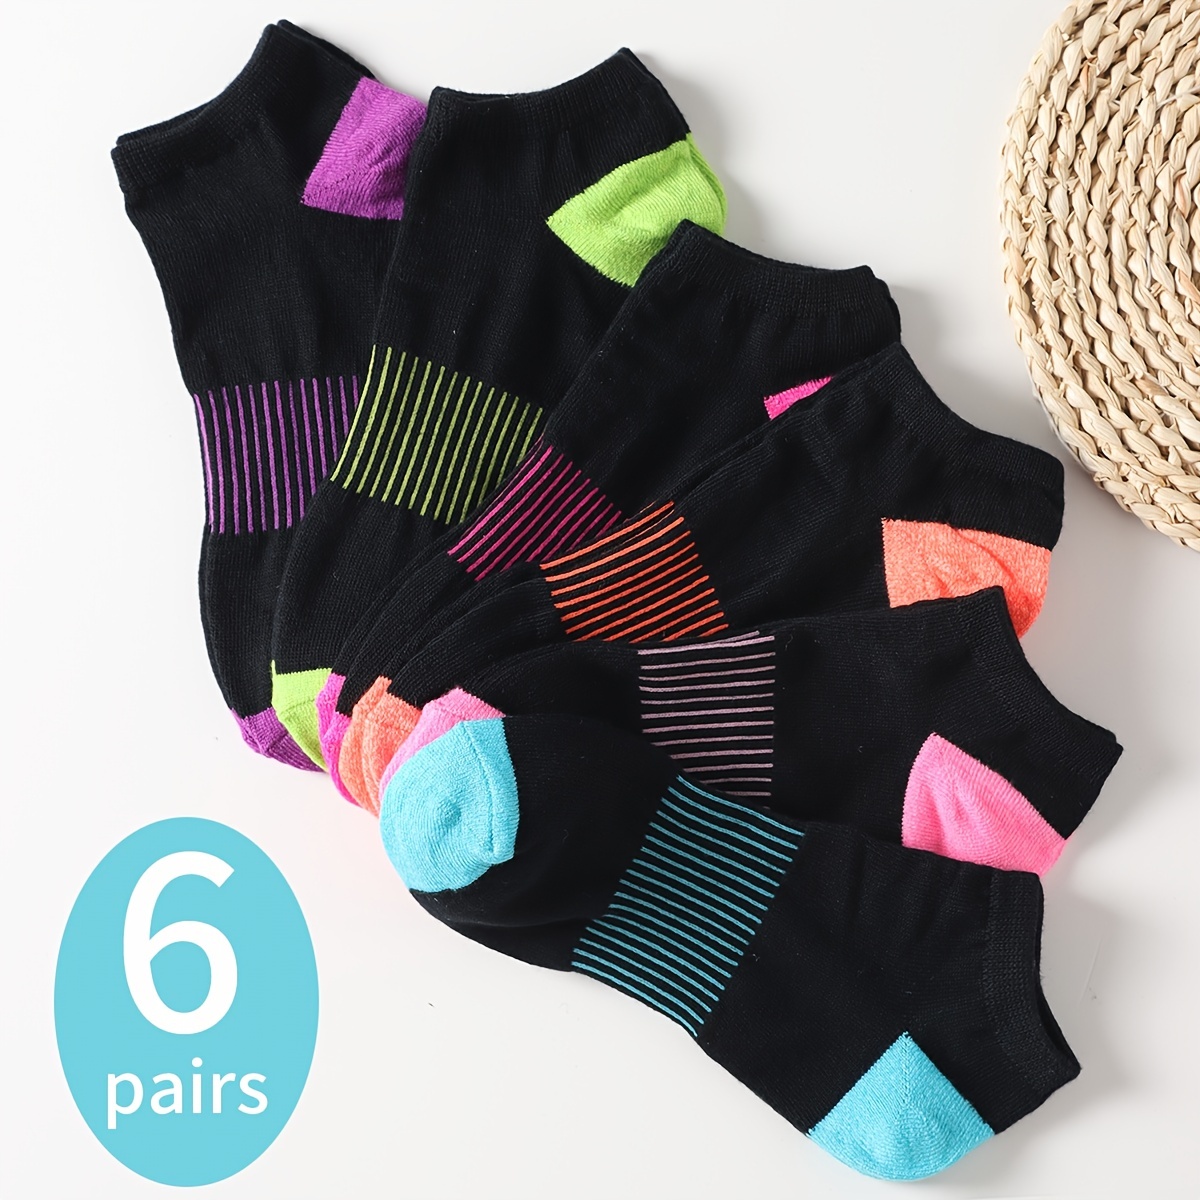 

6 Pairs Creative Color Block Socks, Comfy Knitted Men's Crew Sports Socks, Men's Stockings & Hosiery, All Seasons Outdoor